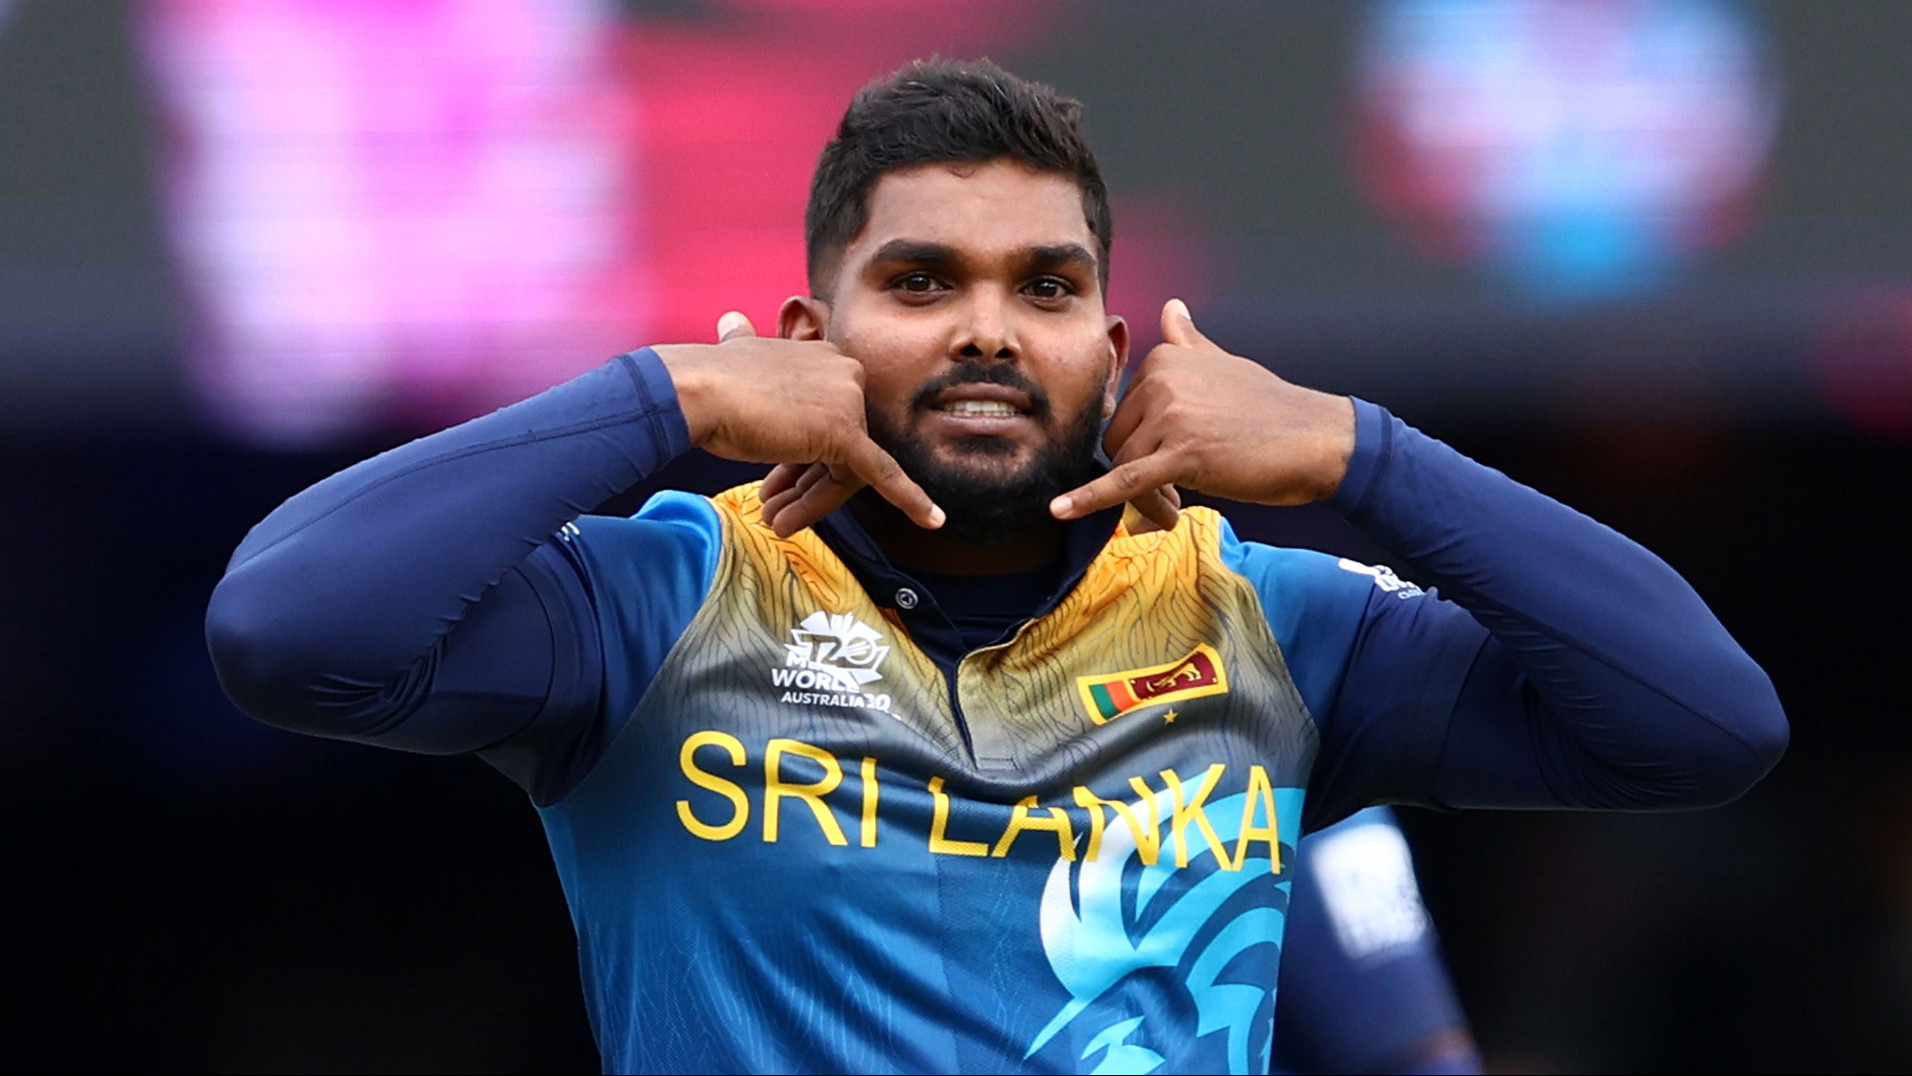 CWC 2023: Sri Lanka’s Wanindu Hasaranga doubtful for World Cup 2023 due to hamstring tear- Report